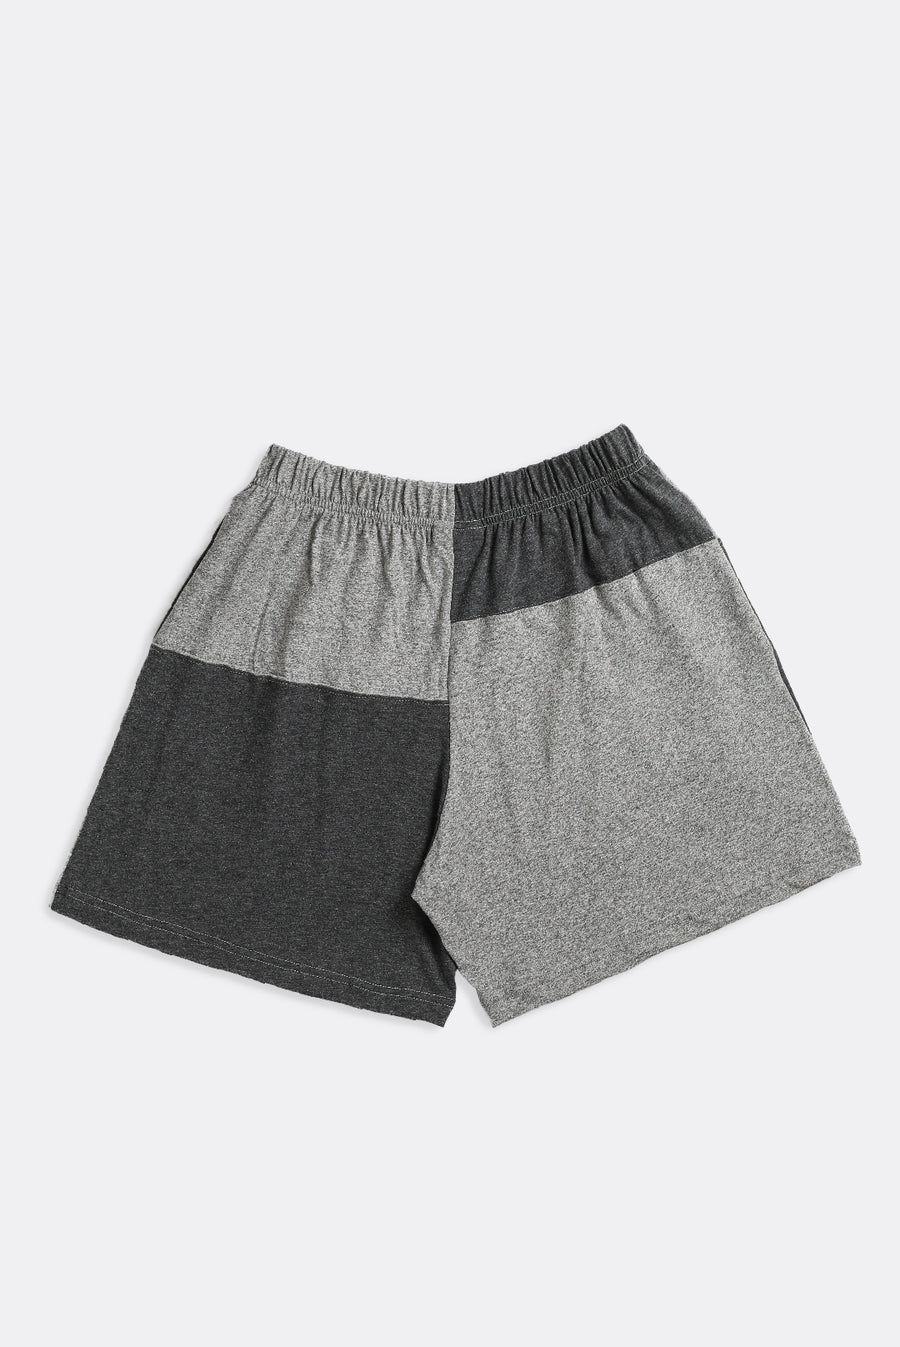 Unisex Rework Polo Patchwork Tee Shorts - XS, S, M, L, XL